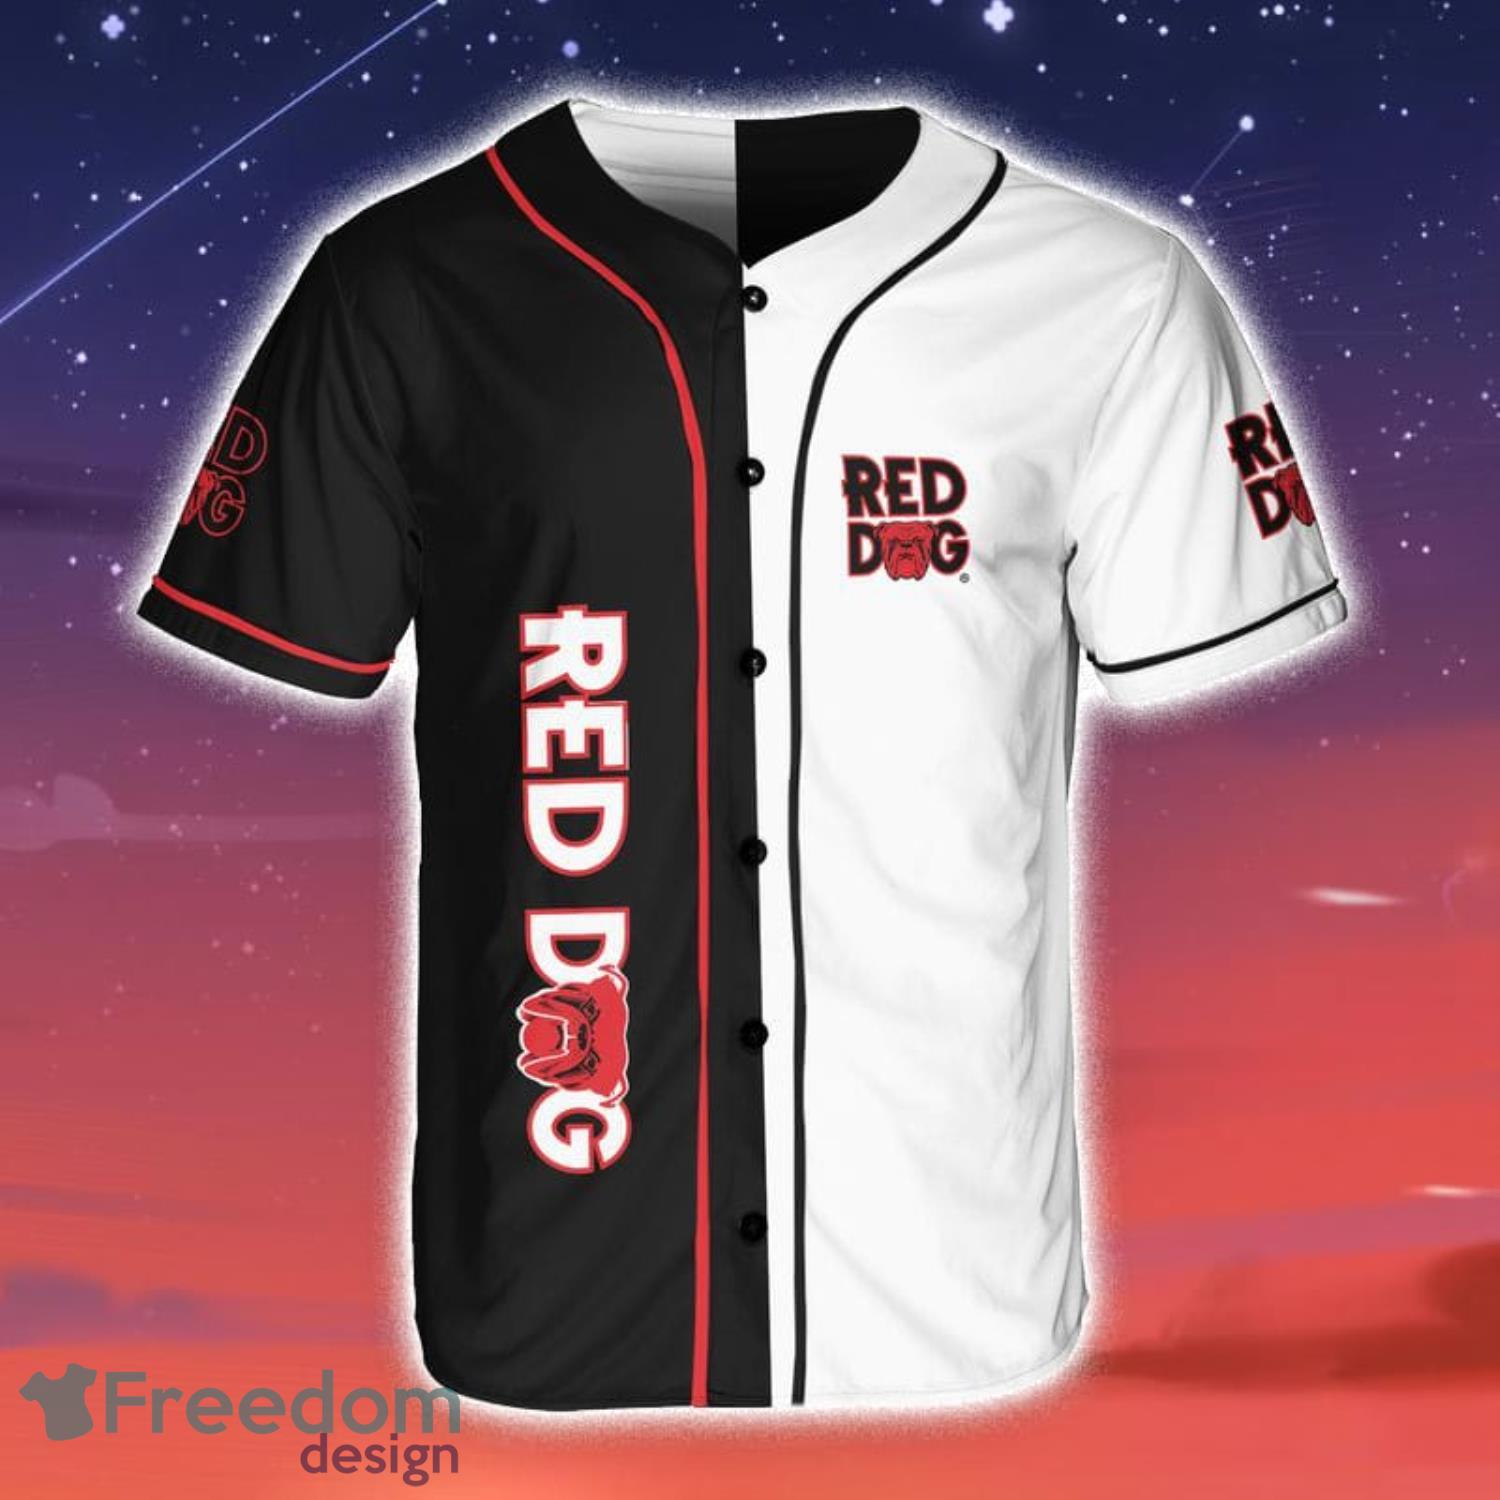 Red Dog Beer Men And Women Baseball Jersey Shirt Summer Gift For Sport Fans  - Freedomdesign